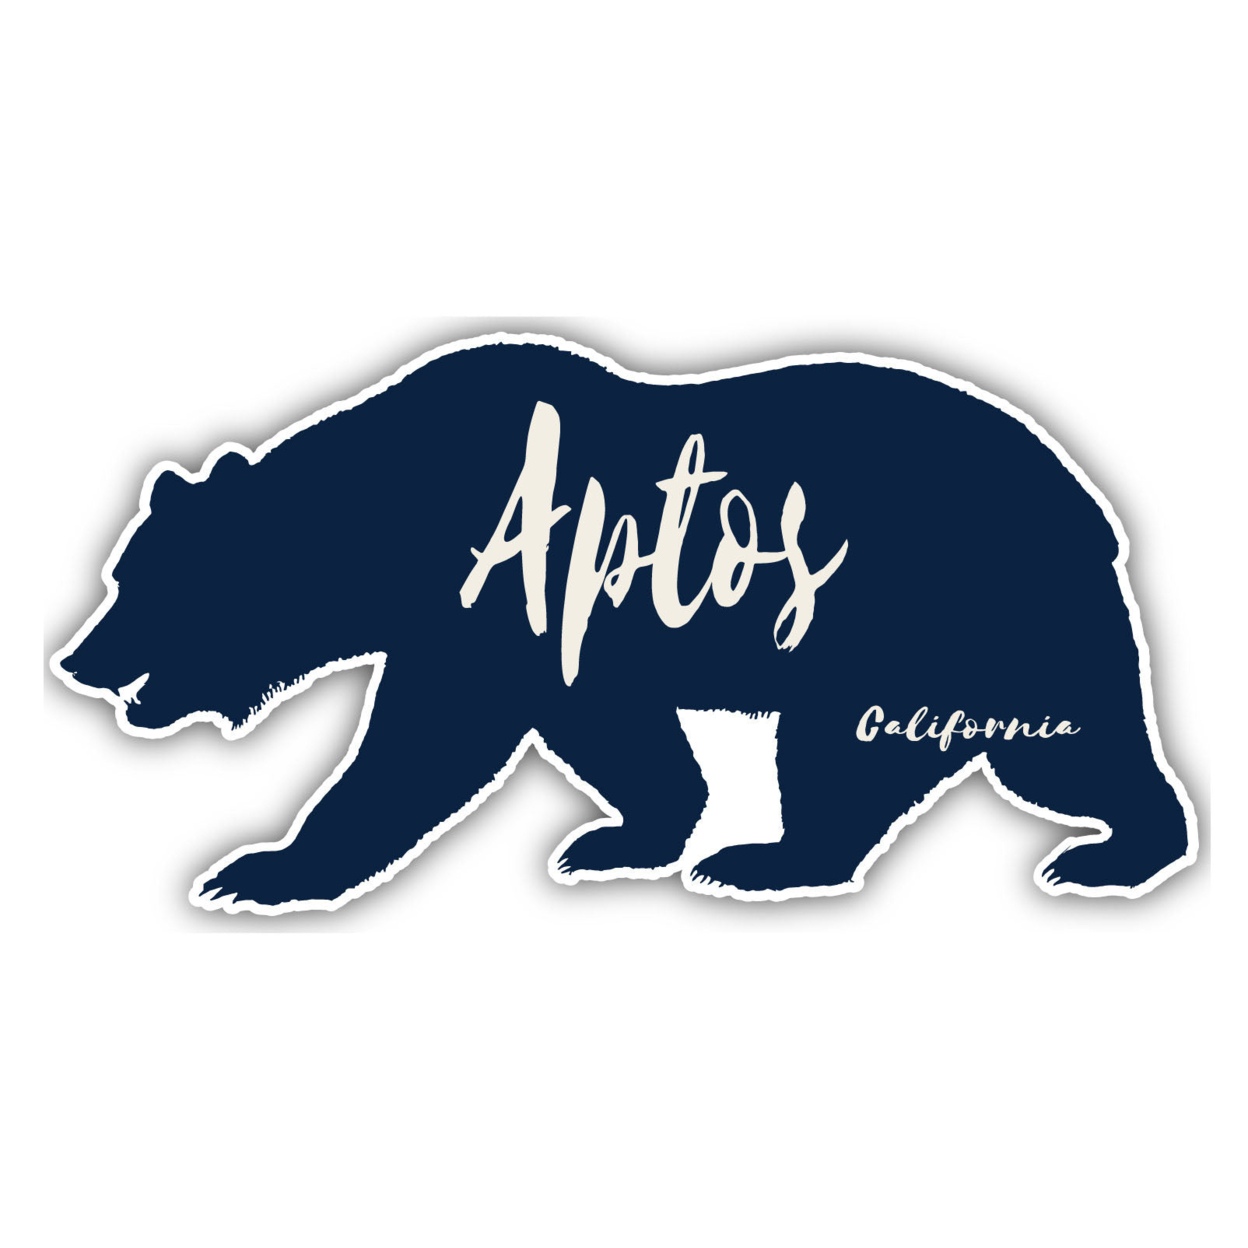 Aptos California Souvenir Decorative Stickers (Choose Theme And Size) - Single Unit, 6-Inch, Bear